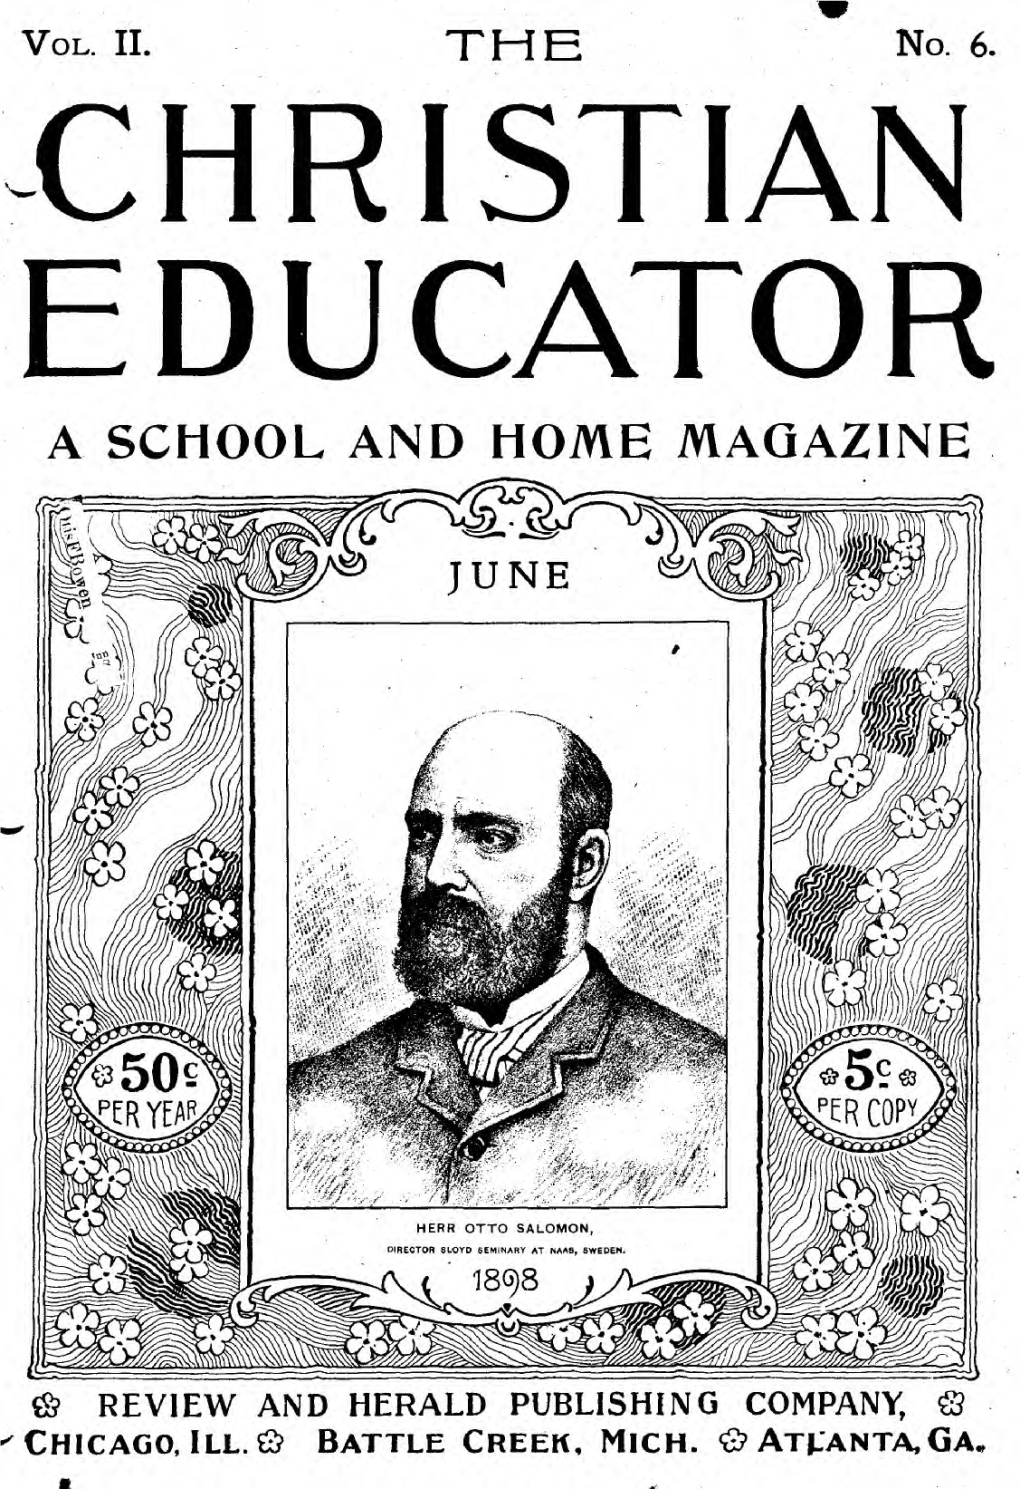 The Christian Educator for 1898